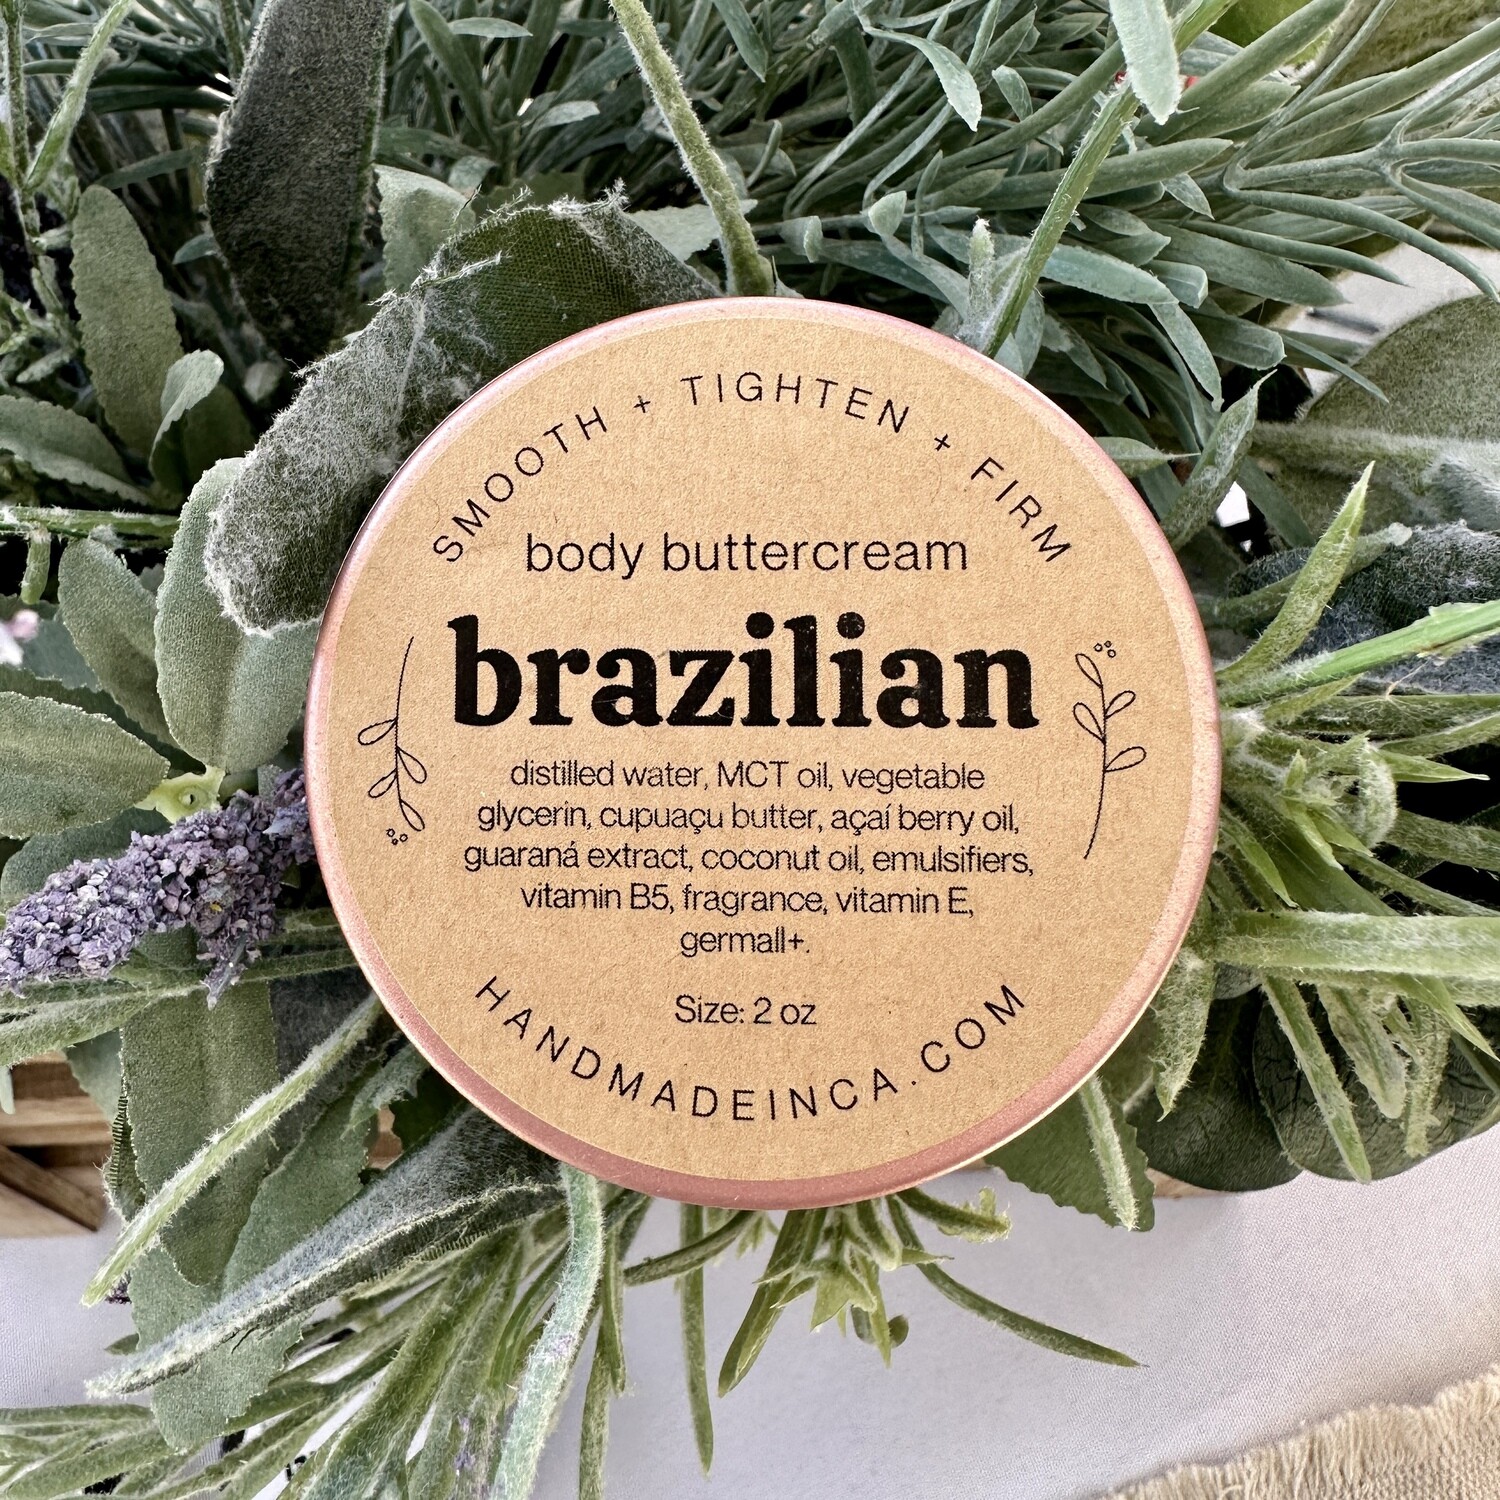 Brazilian Tightening Body Buttercream